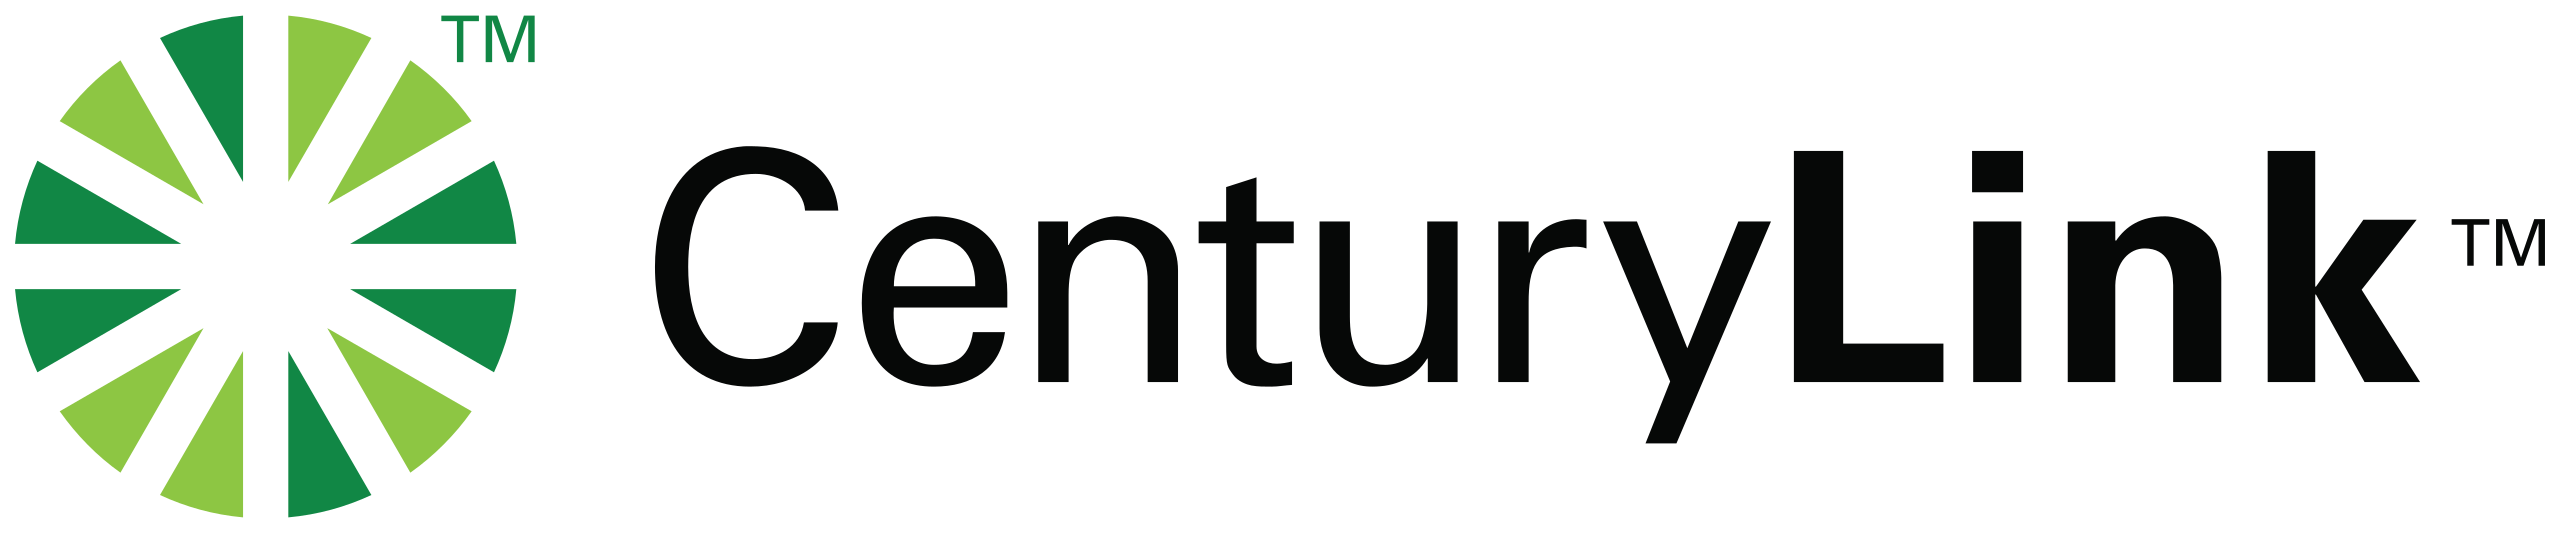 CenturyLink_2010_logo.svg